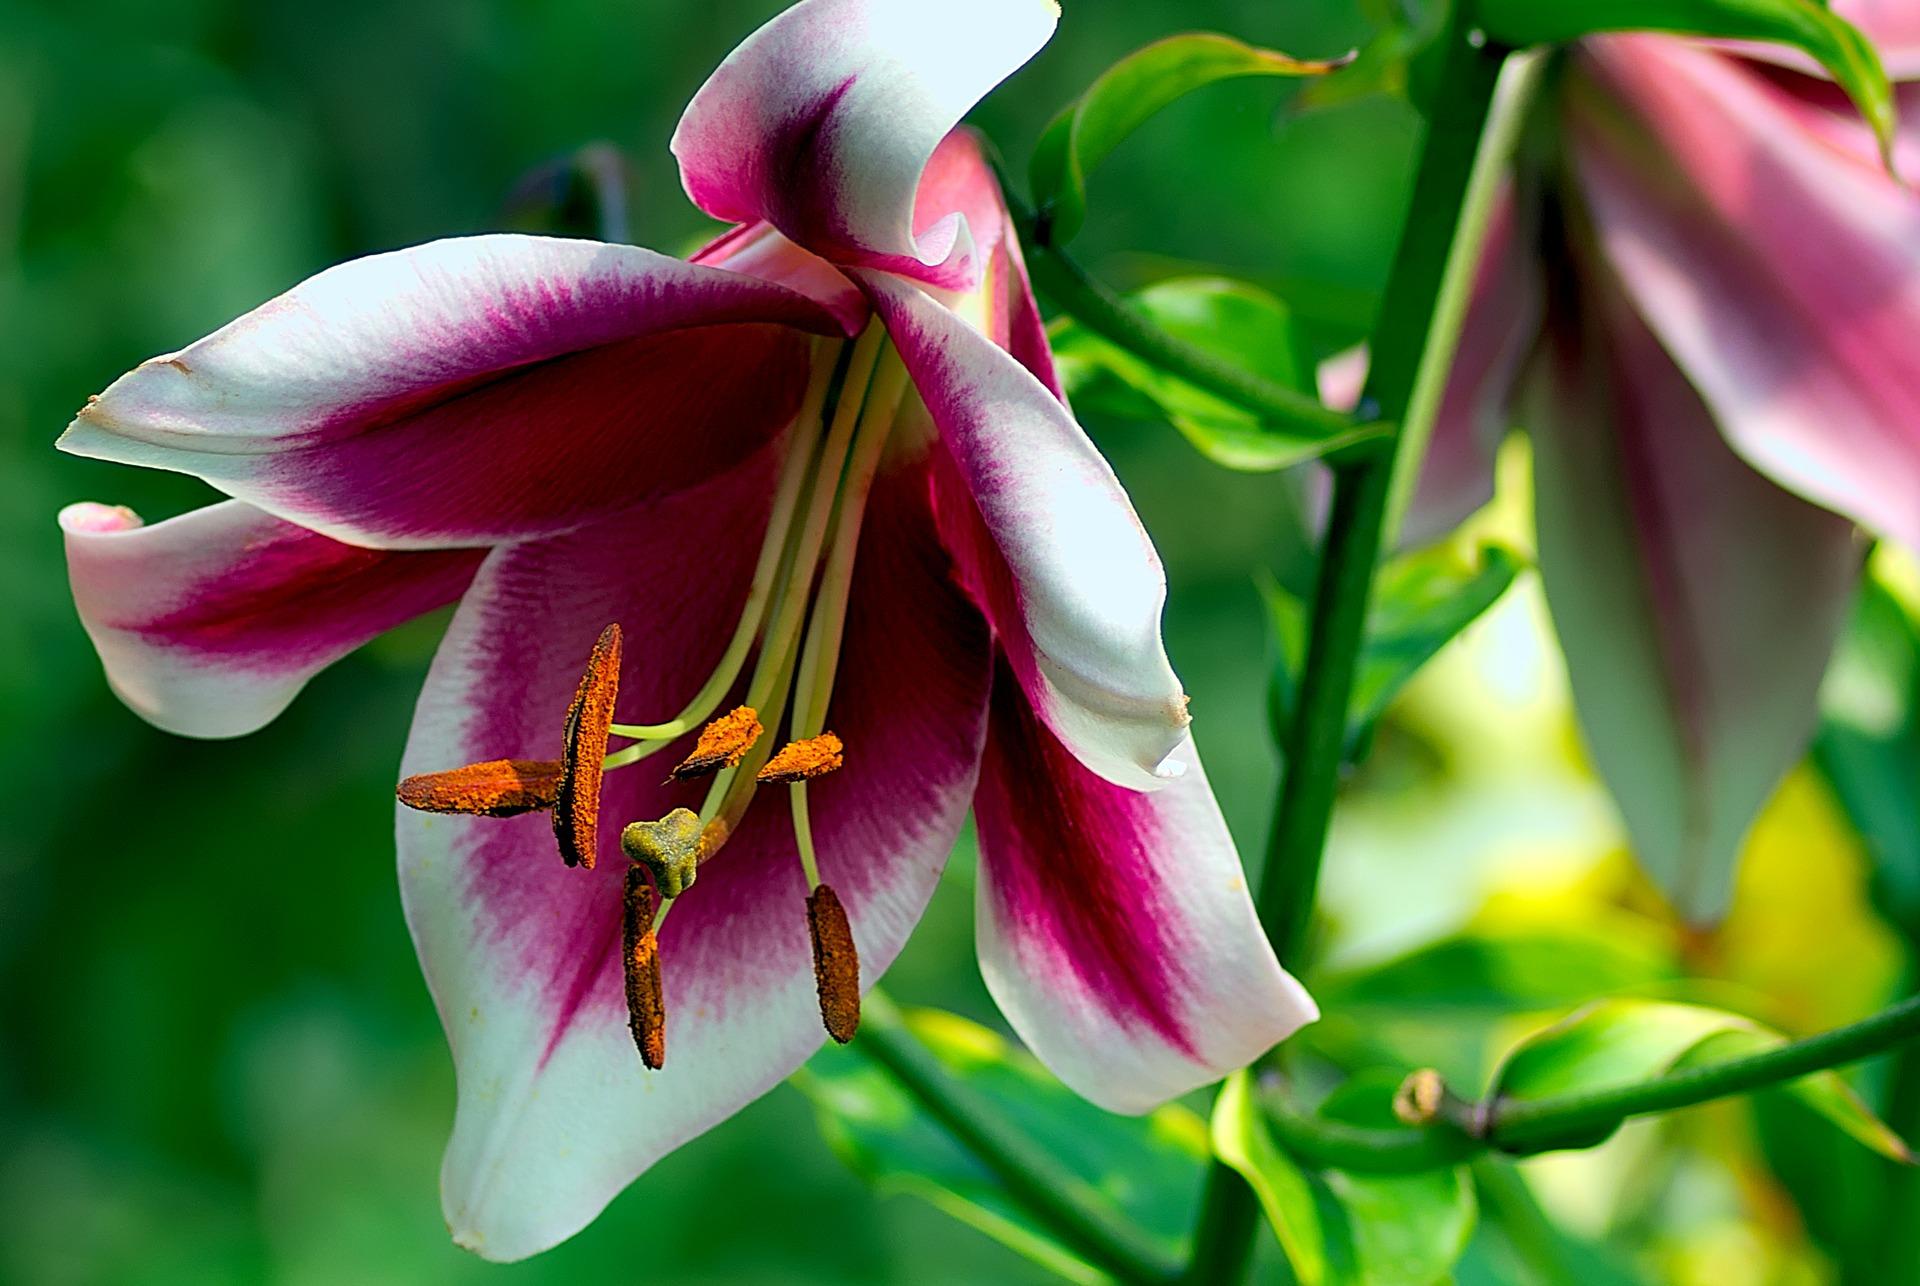 Lilies Oriental Trumpet 'Frisco' - Tree Lilies/Orienpet Lily (Shipping begins Jan. 2021) from Leo Berbee Bulb Company